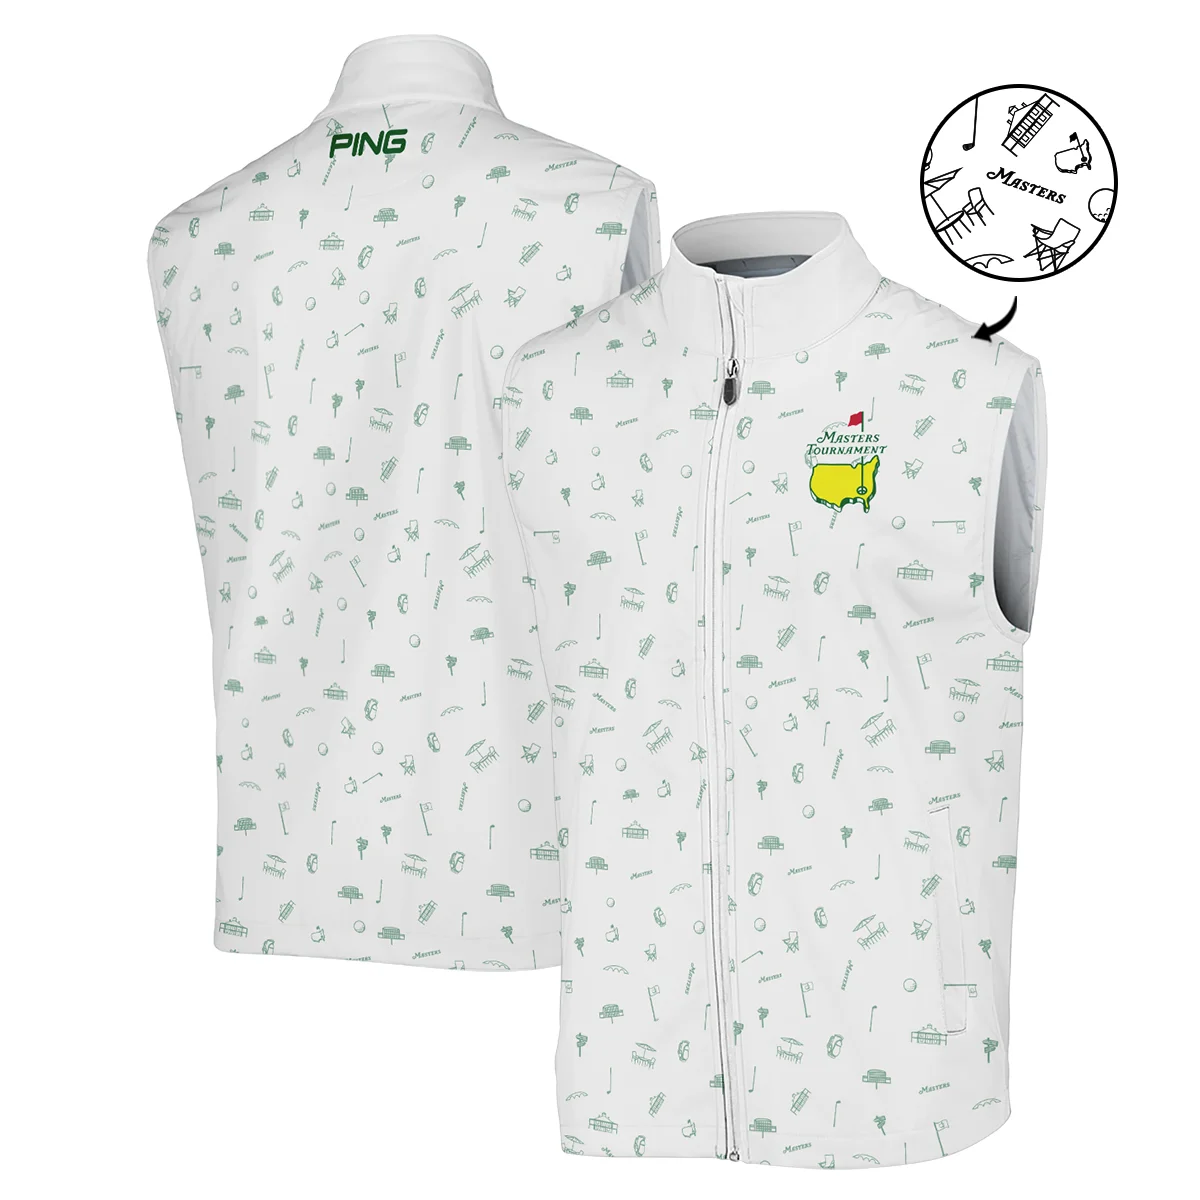 Golf Sport Masters Tournament Ping Zipper Polo Shirt Sports Augusta Icons Pattern White Green Zipper Polo Shirt For Men